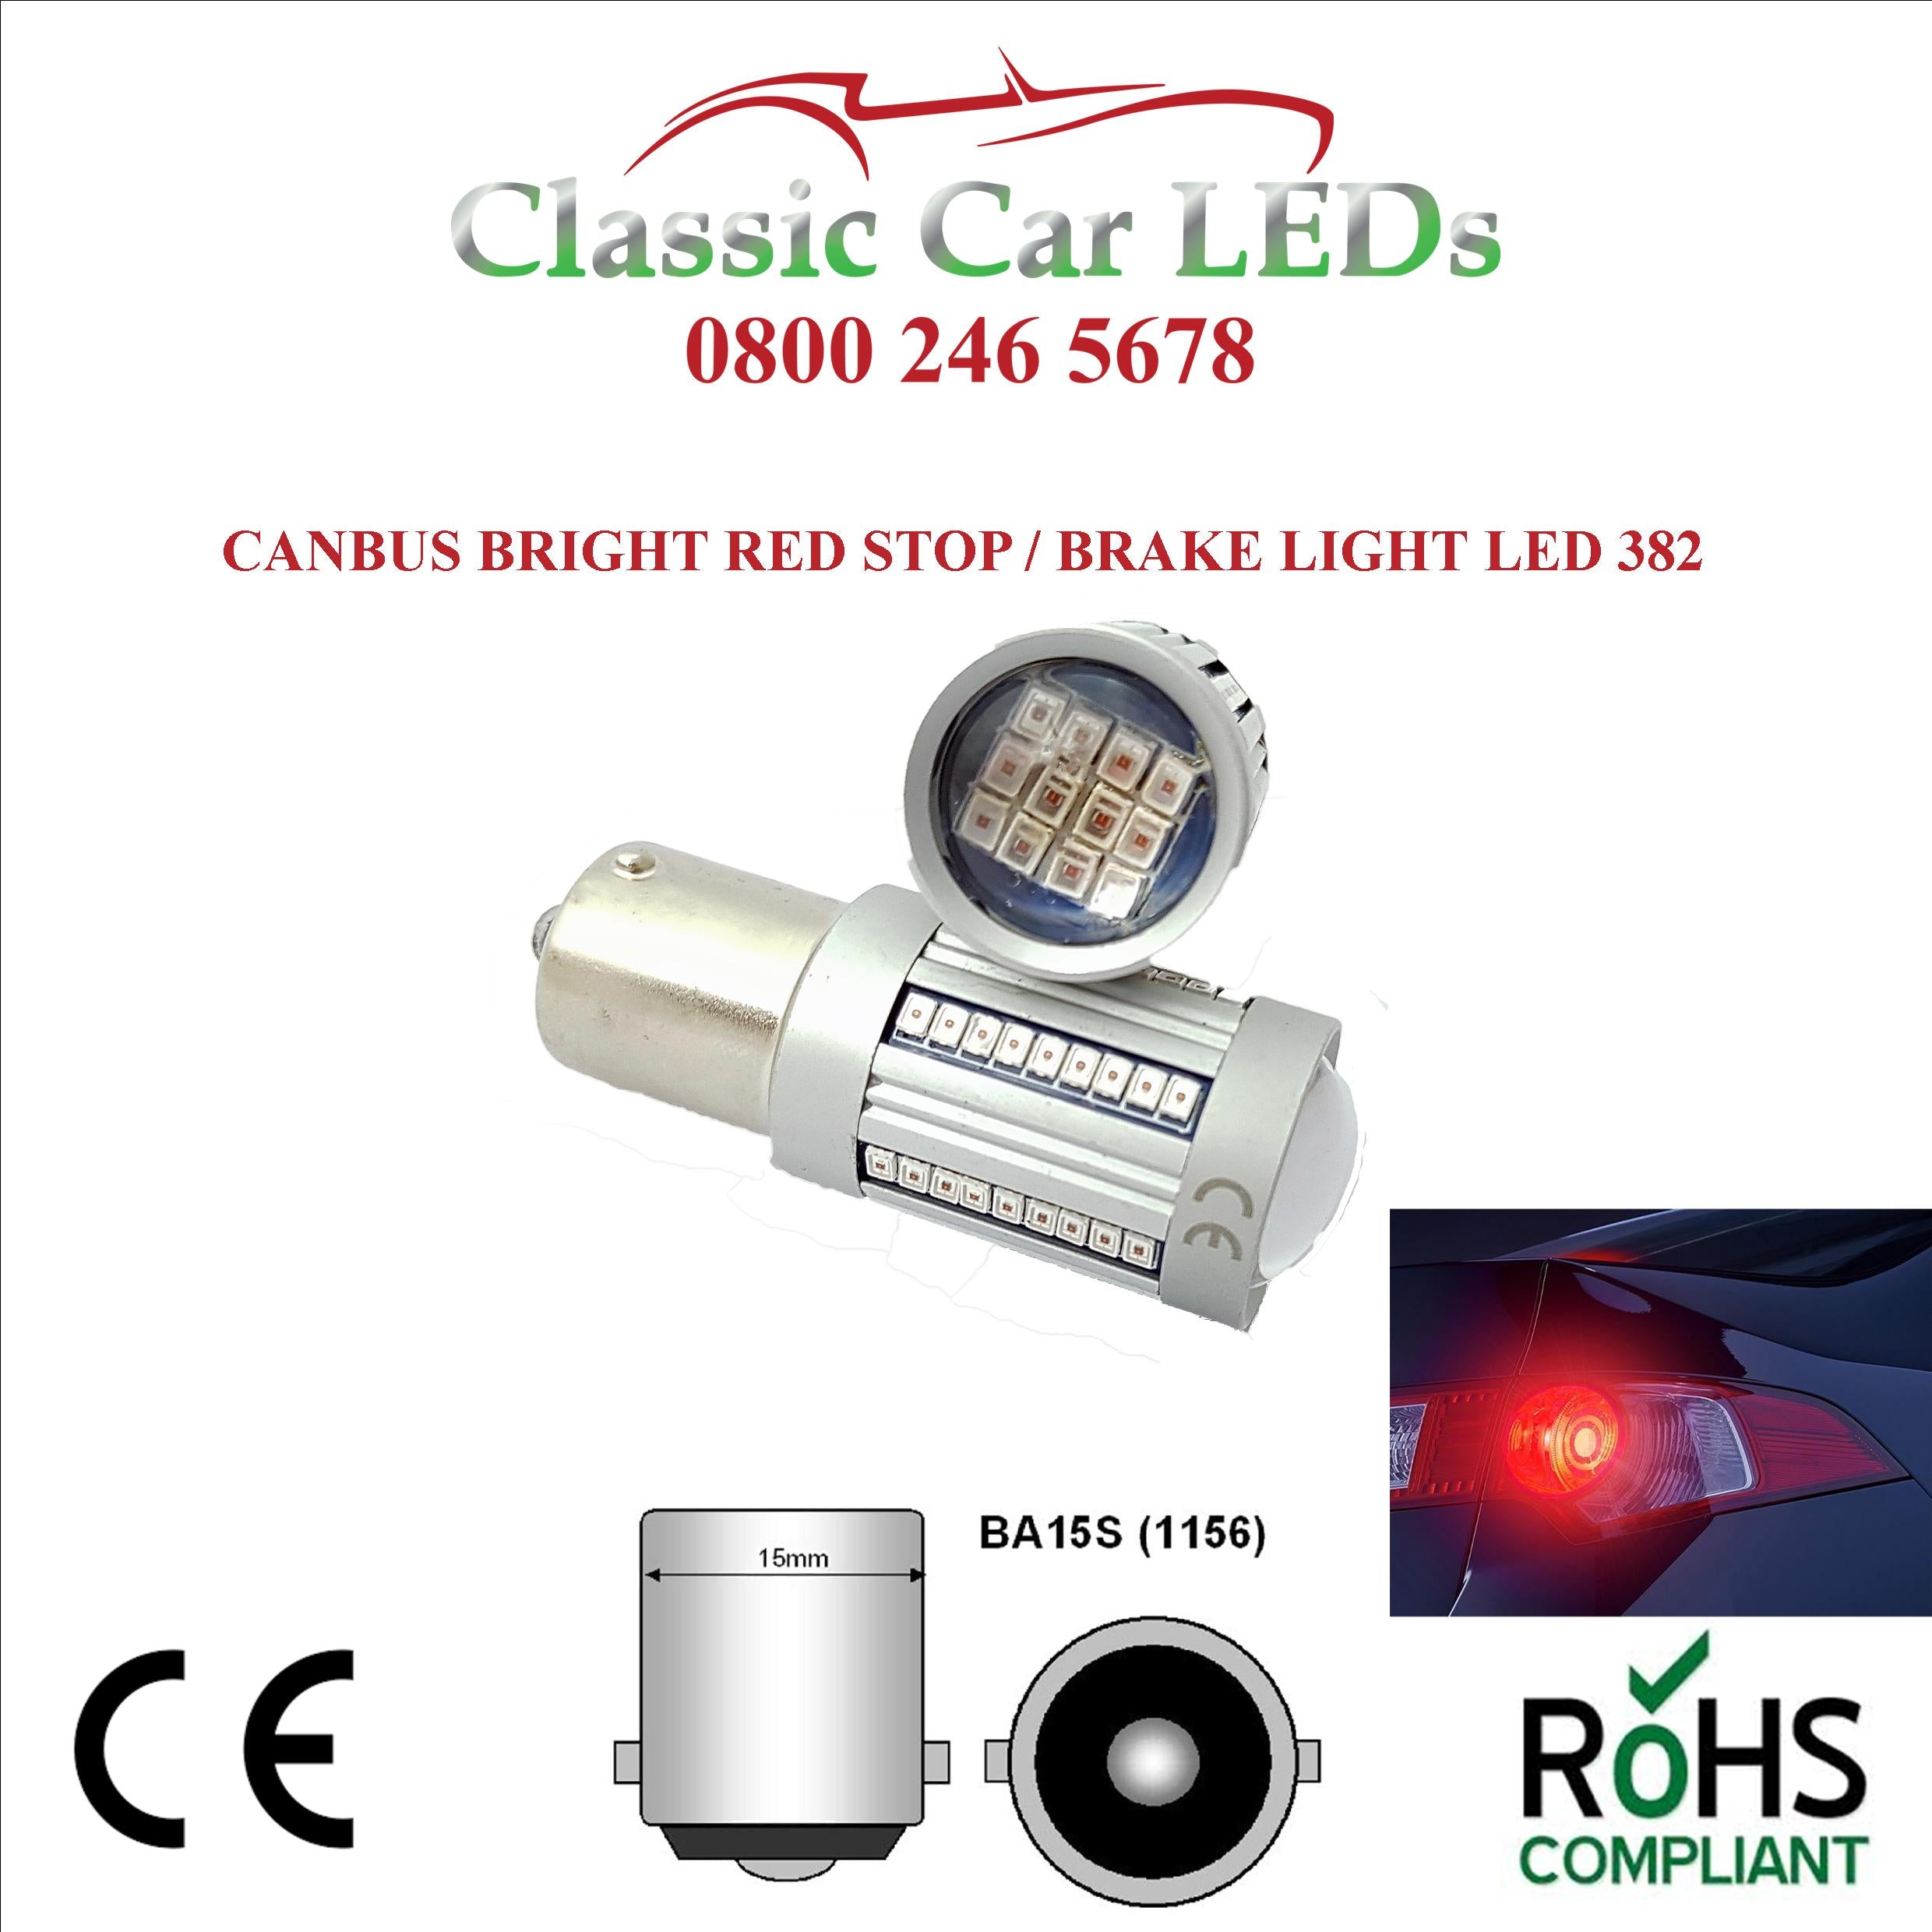 mad Refinement Fejde Strong Canbus Stop Brake Light Red LED 1156 P21W 382 – Classic Car LEDs Ltd